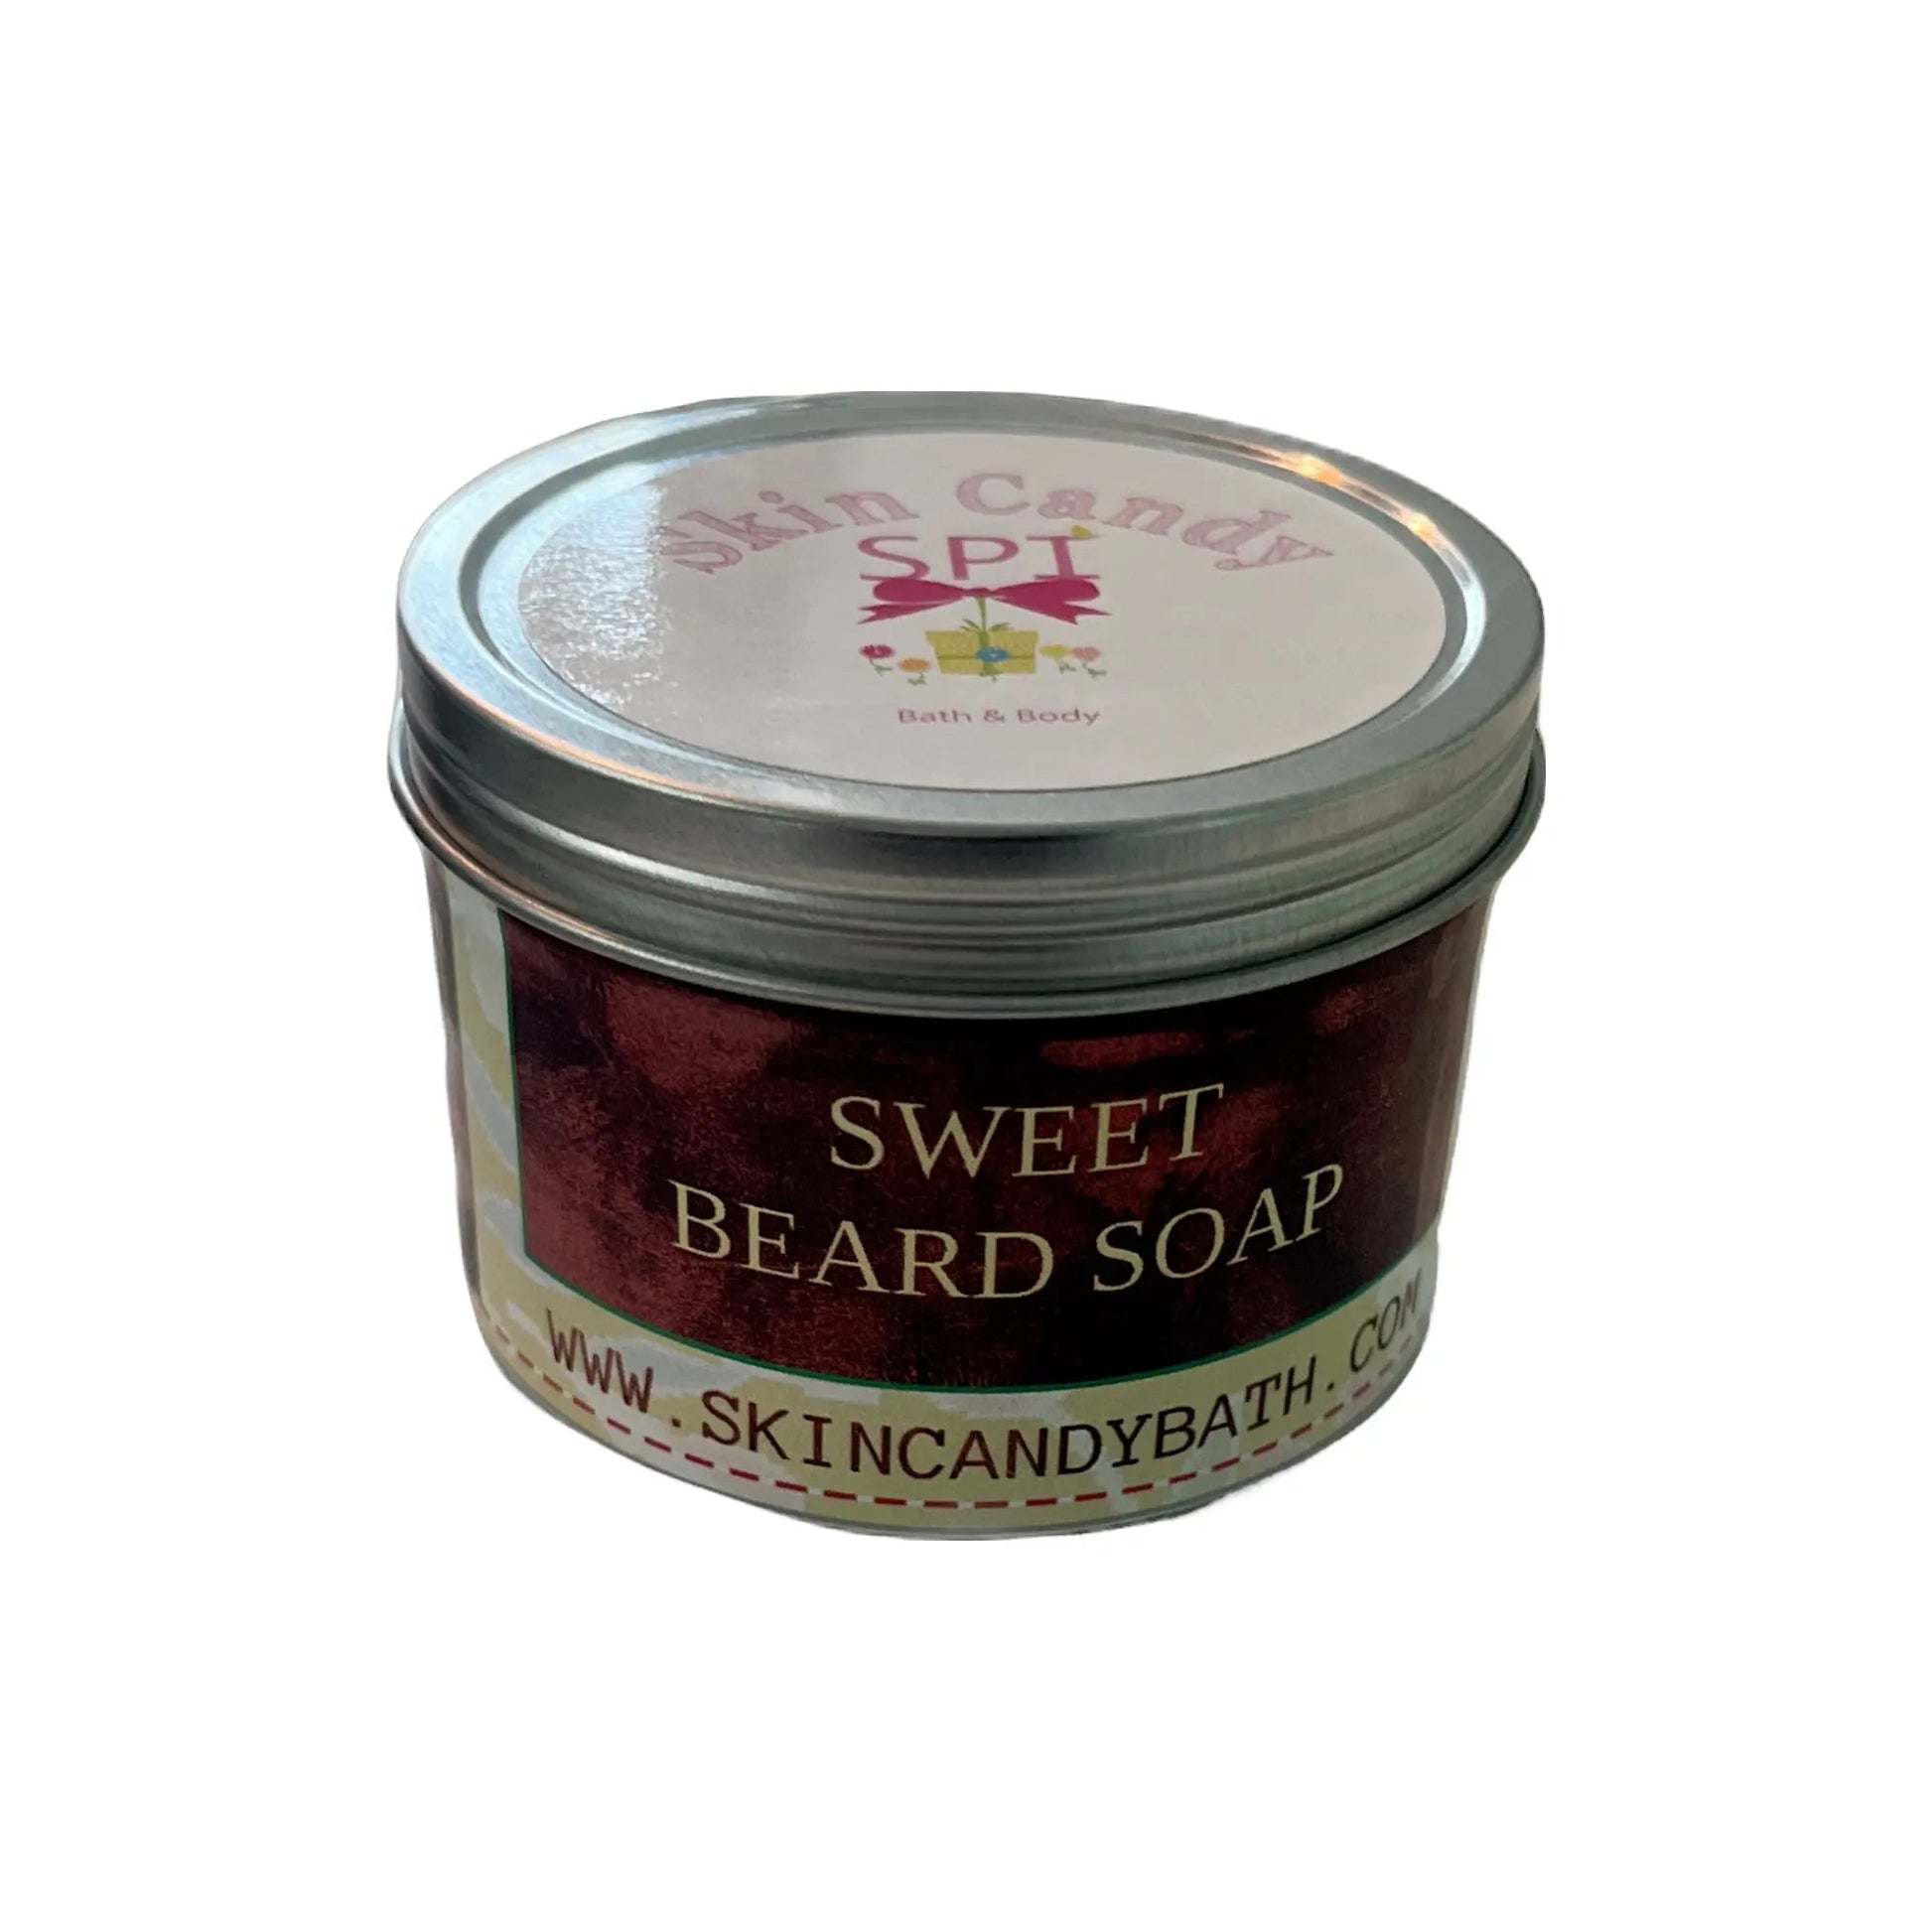 Sweet Beard Soap - Skin Candy Bath & Body